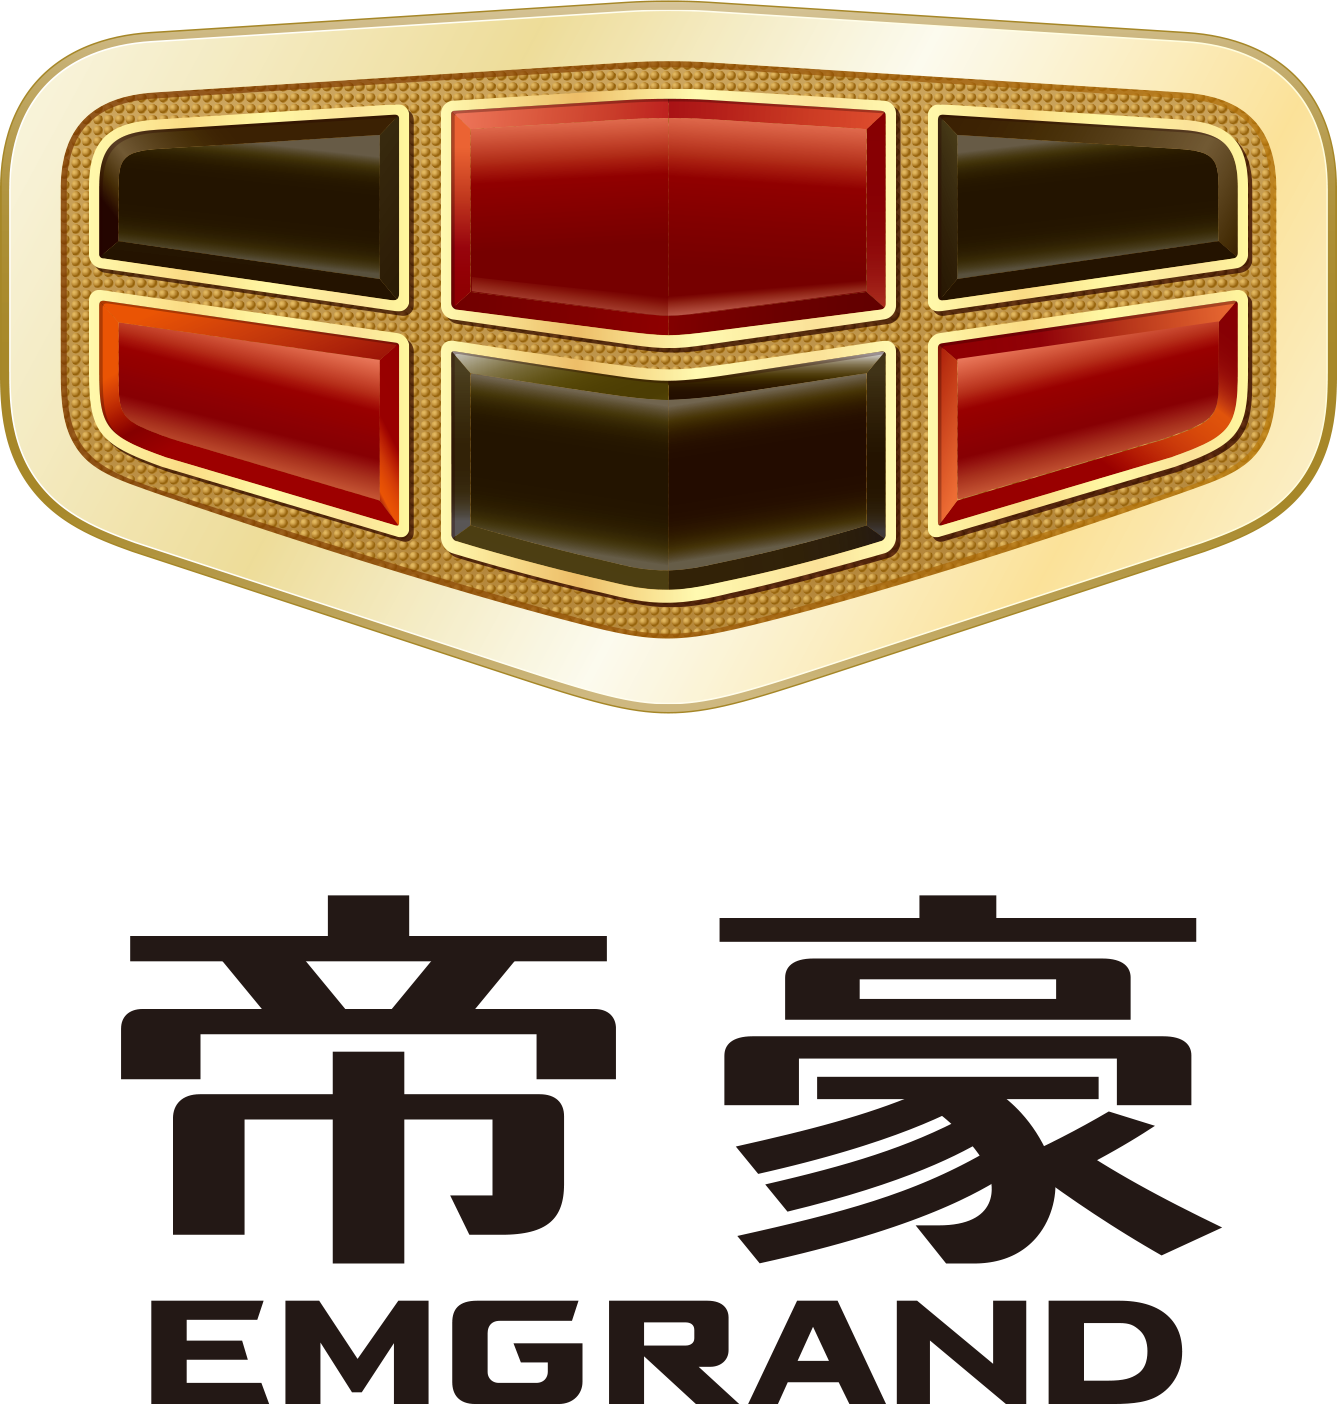 Лейблы кореи. Эмблема Джили Эмгранд. Geely Эмгранд лого. Geely Emgrand Emgrand логотип. Эмблема китайской машины Эмгранд.